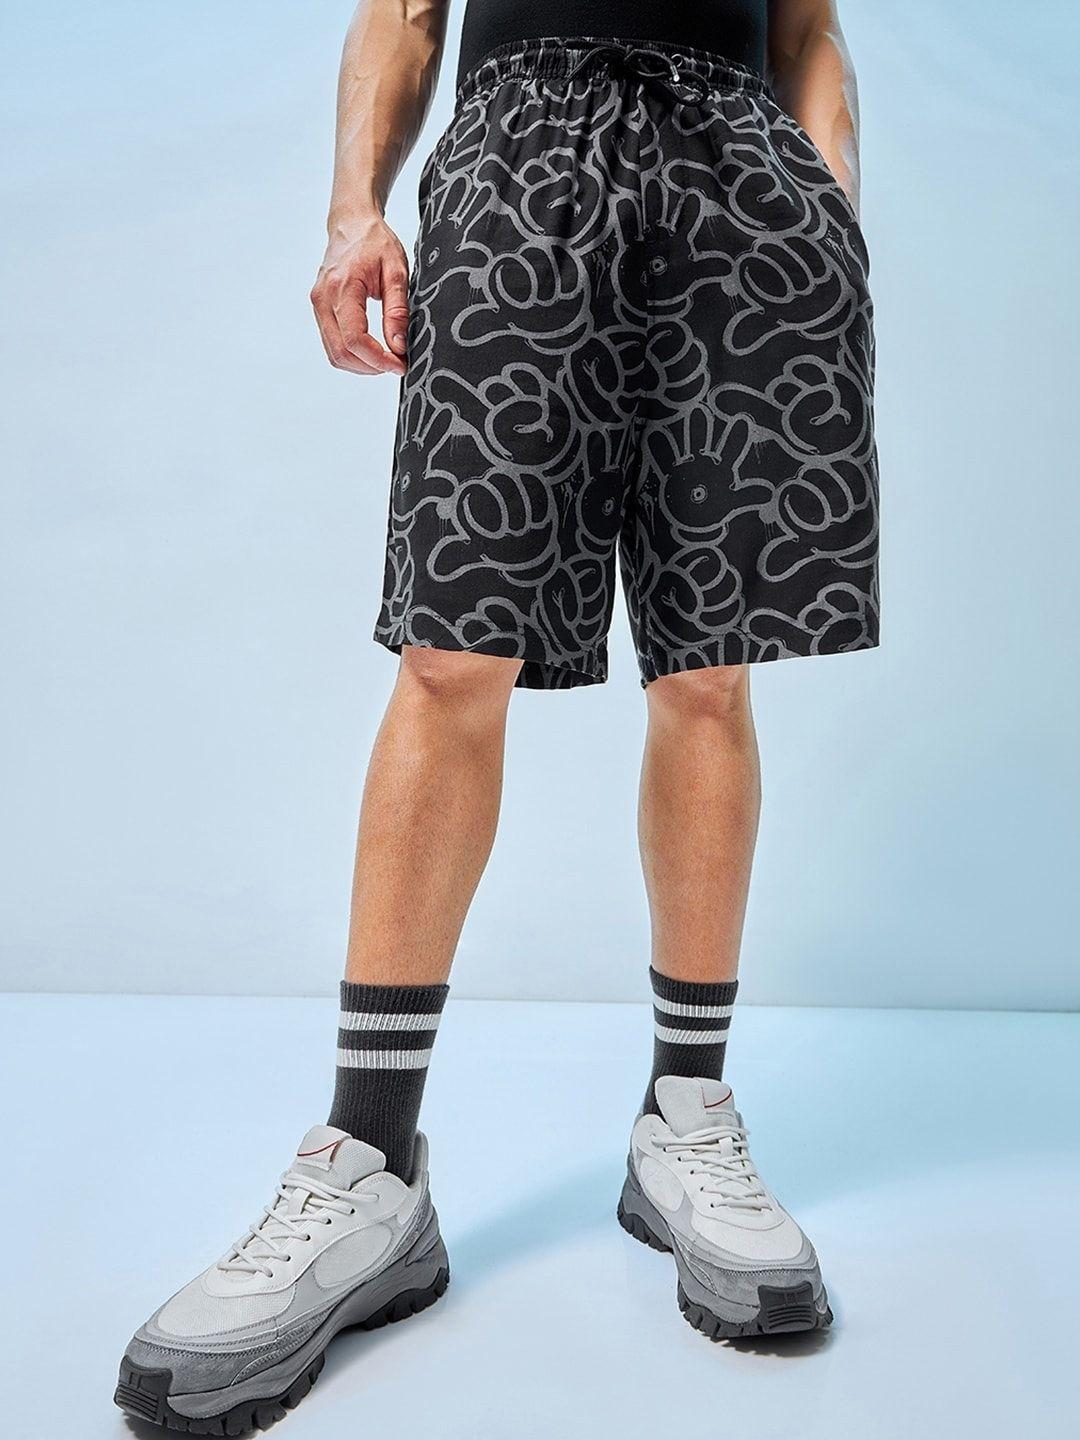 bewakoof-men-conversational-printed-mid-rise-loose-fit-casual-shorts